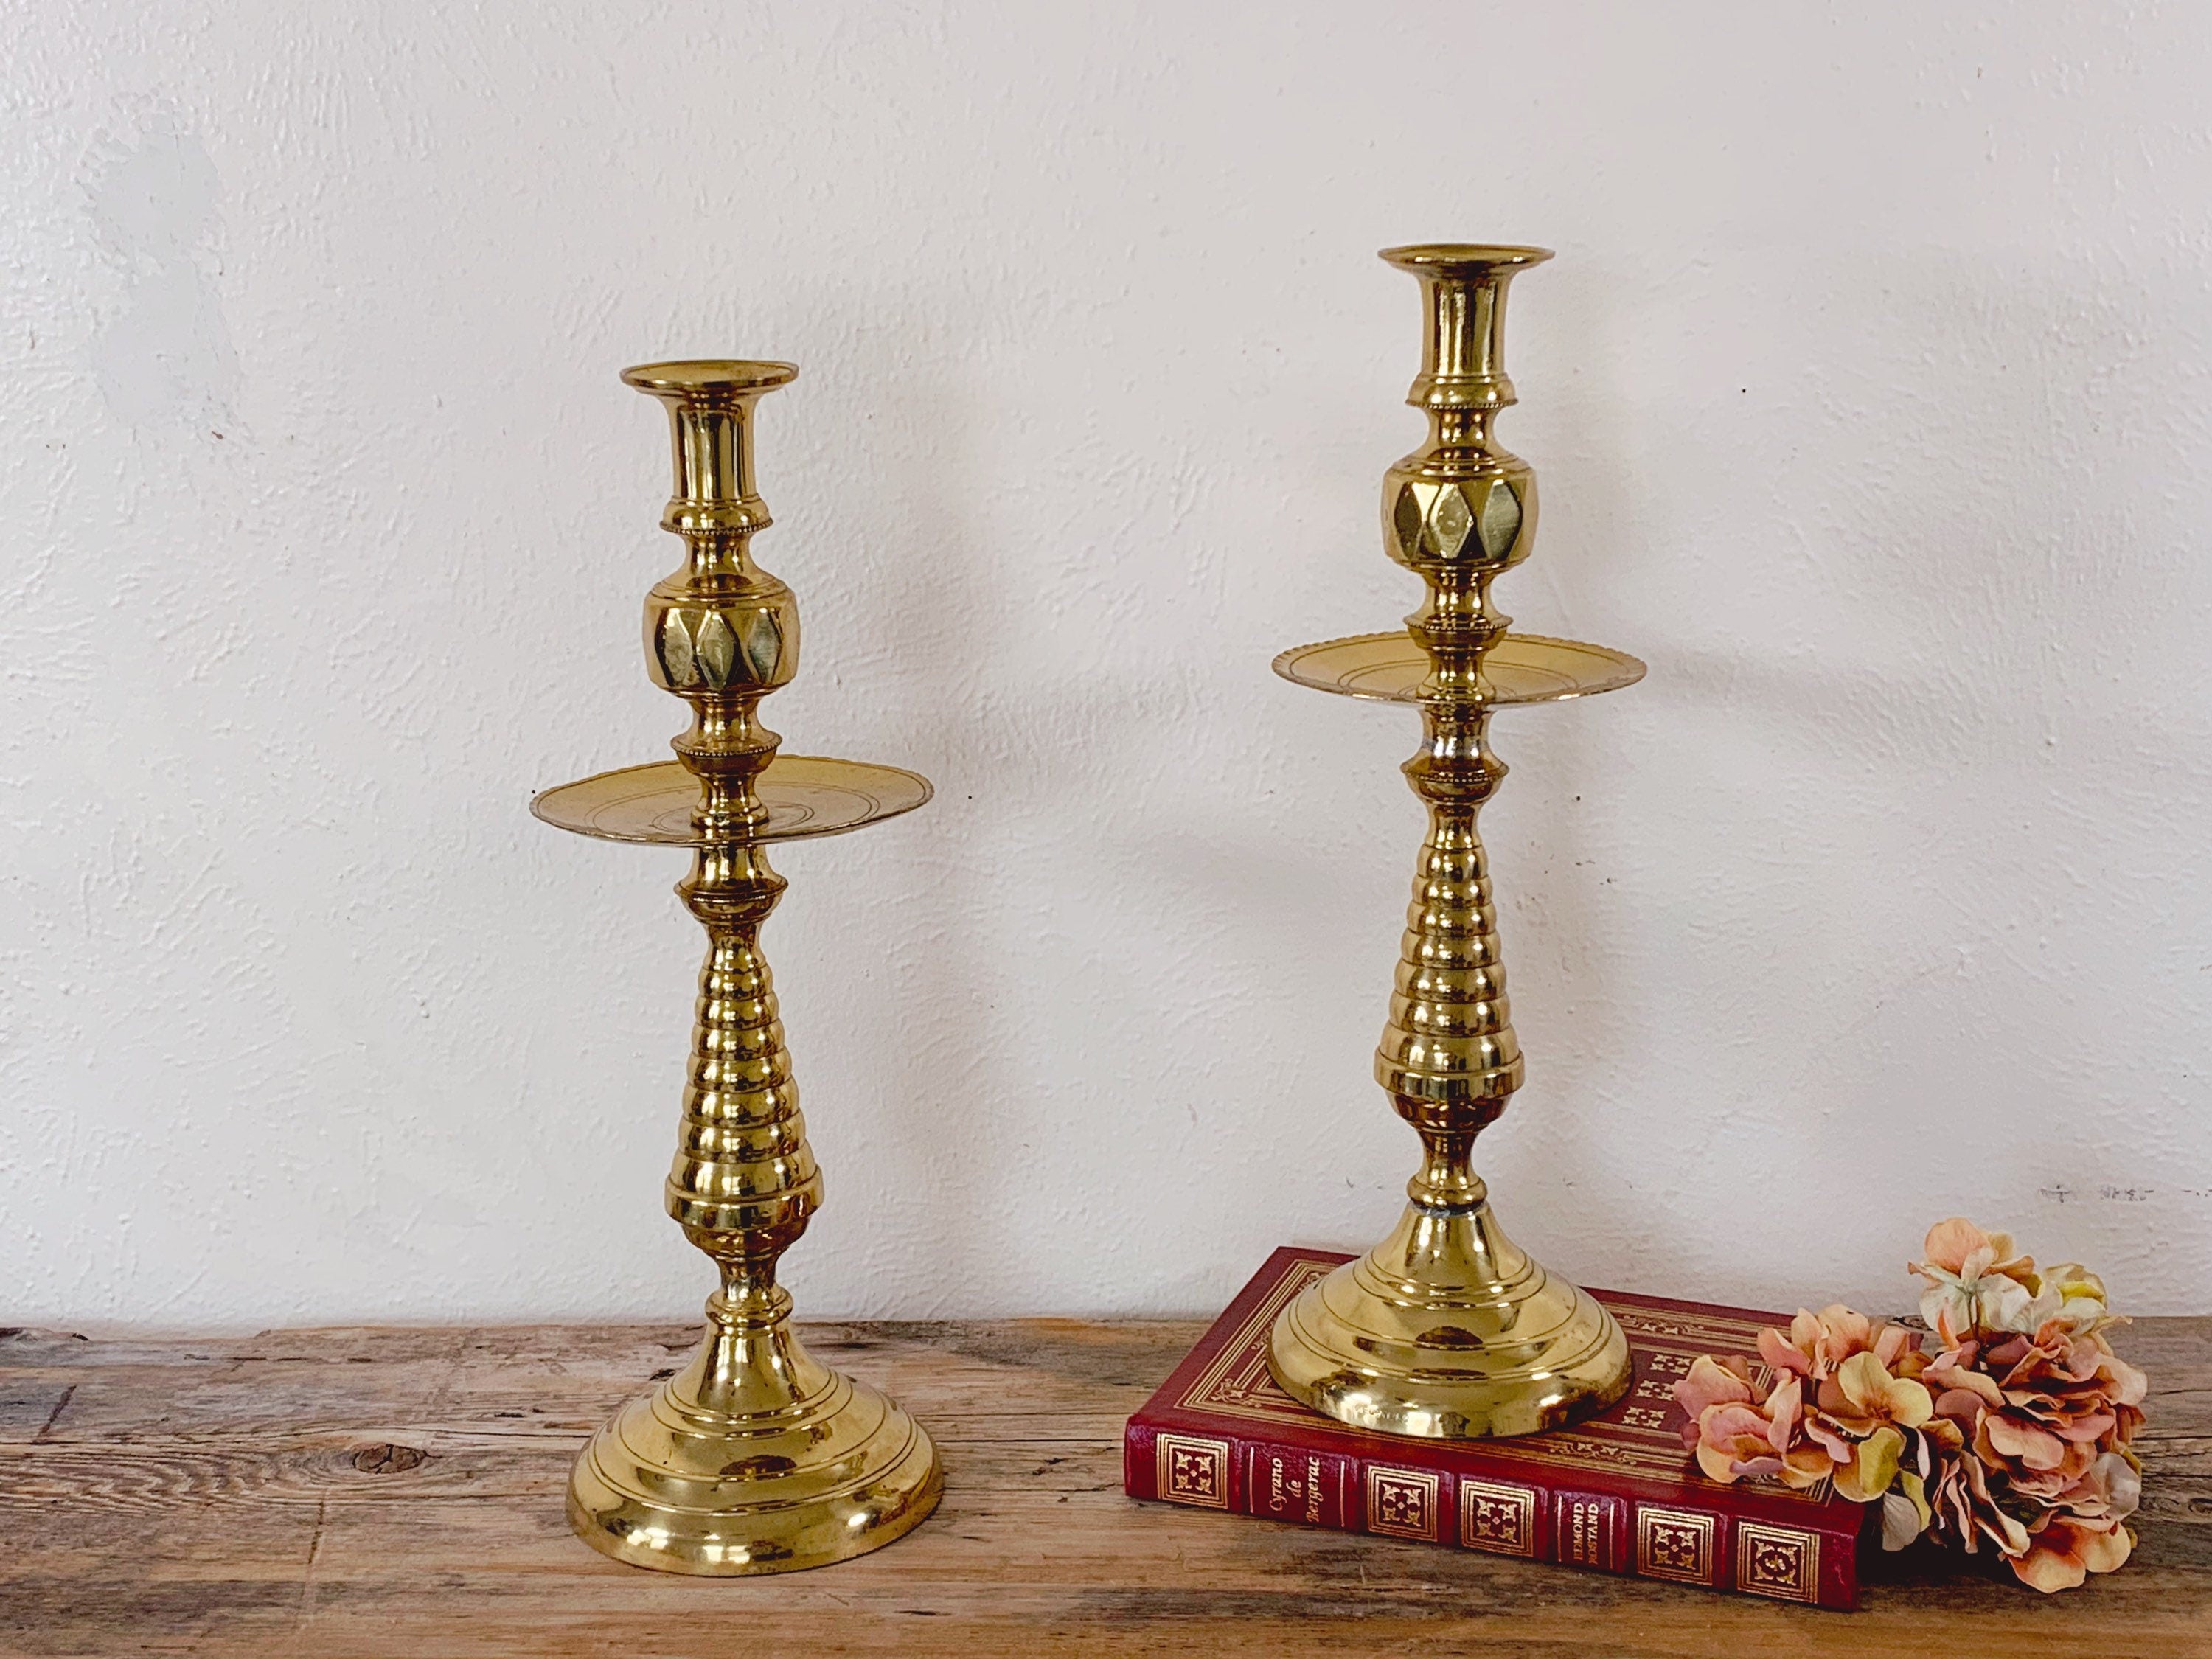 Pair of Tall Schatz & Bolander Birmingham England Antique Brass Candlesticks | 19th Century Beehive Victorian English Candle Holders